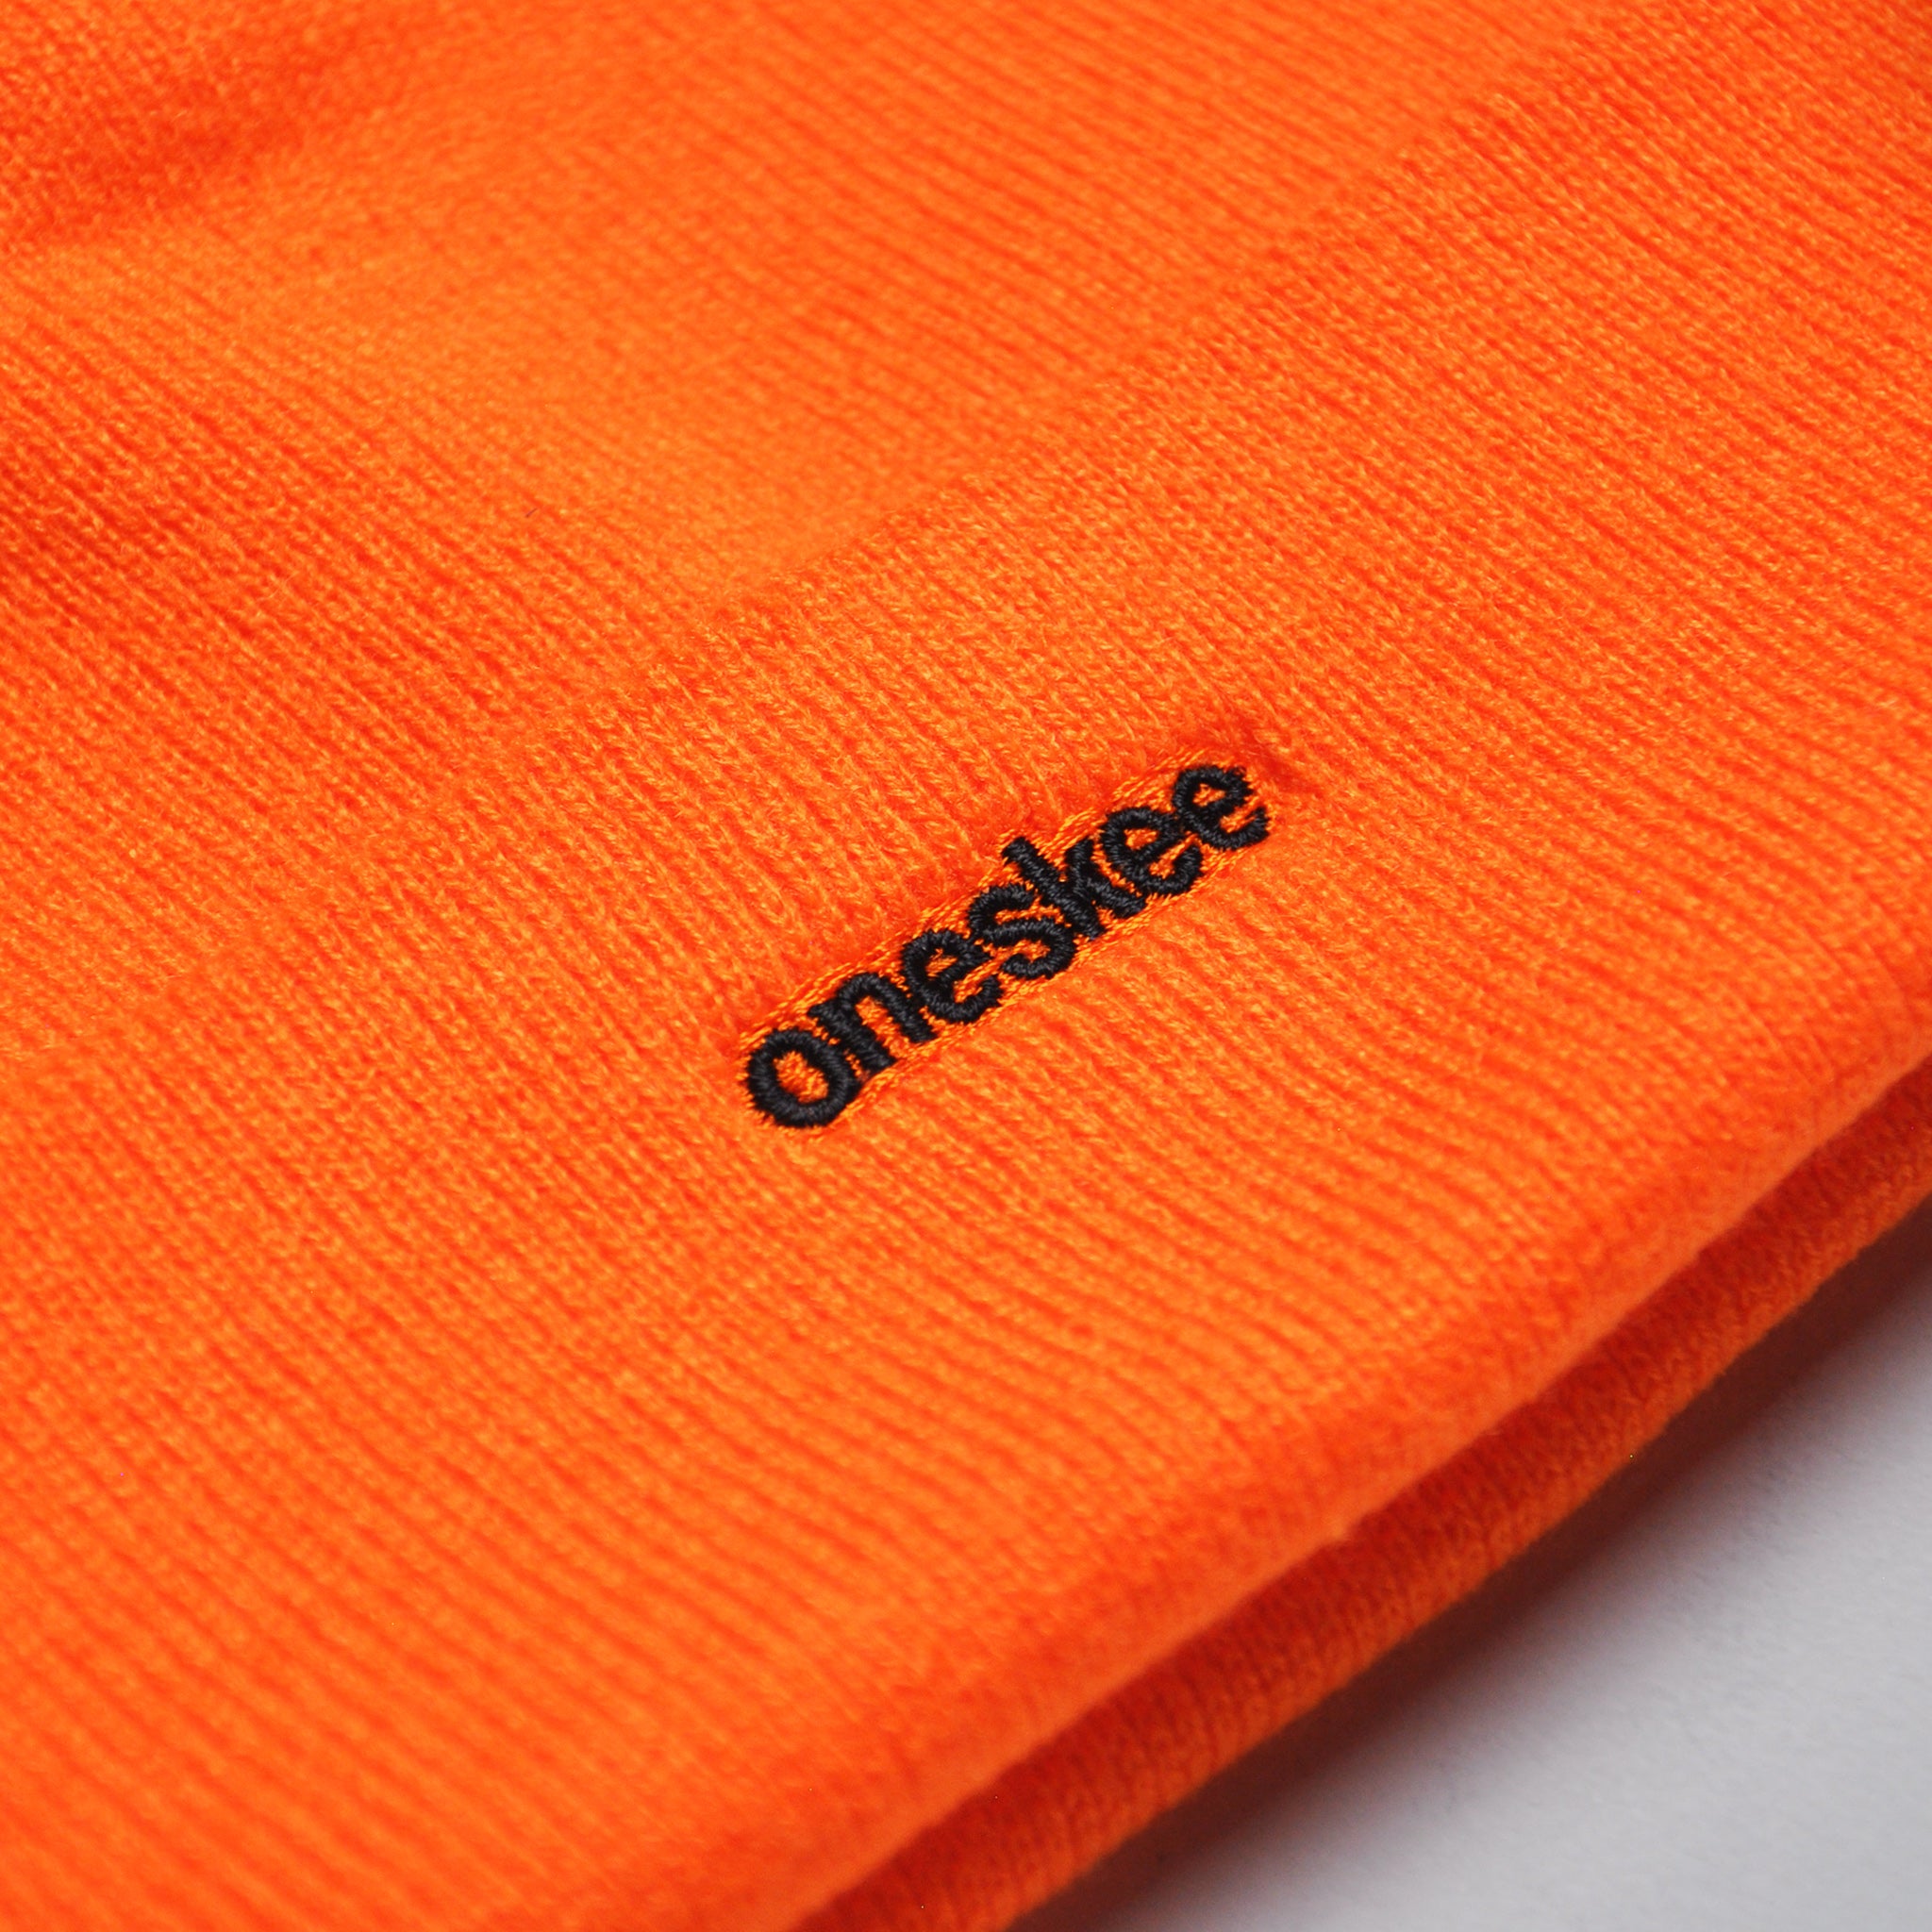 Essential Logo Beanie, Orange